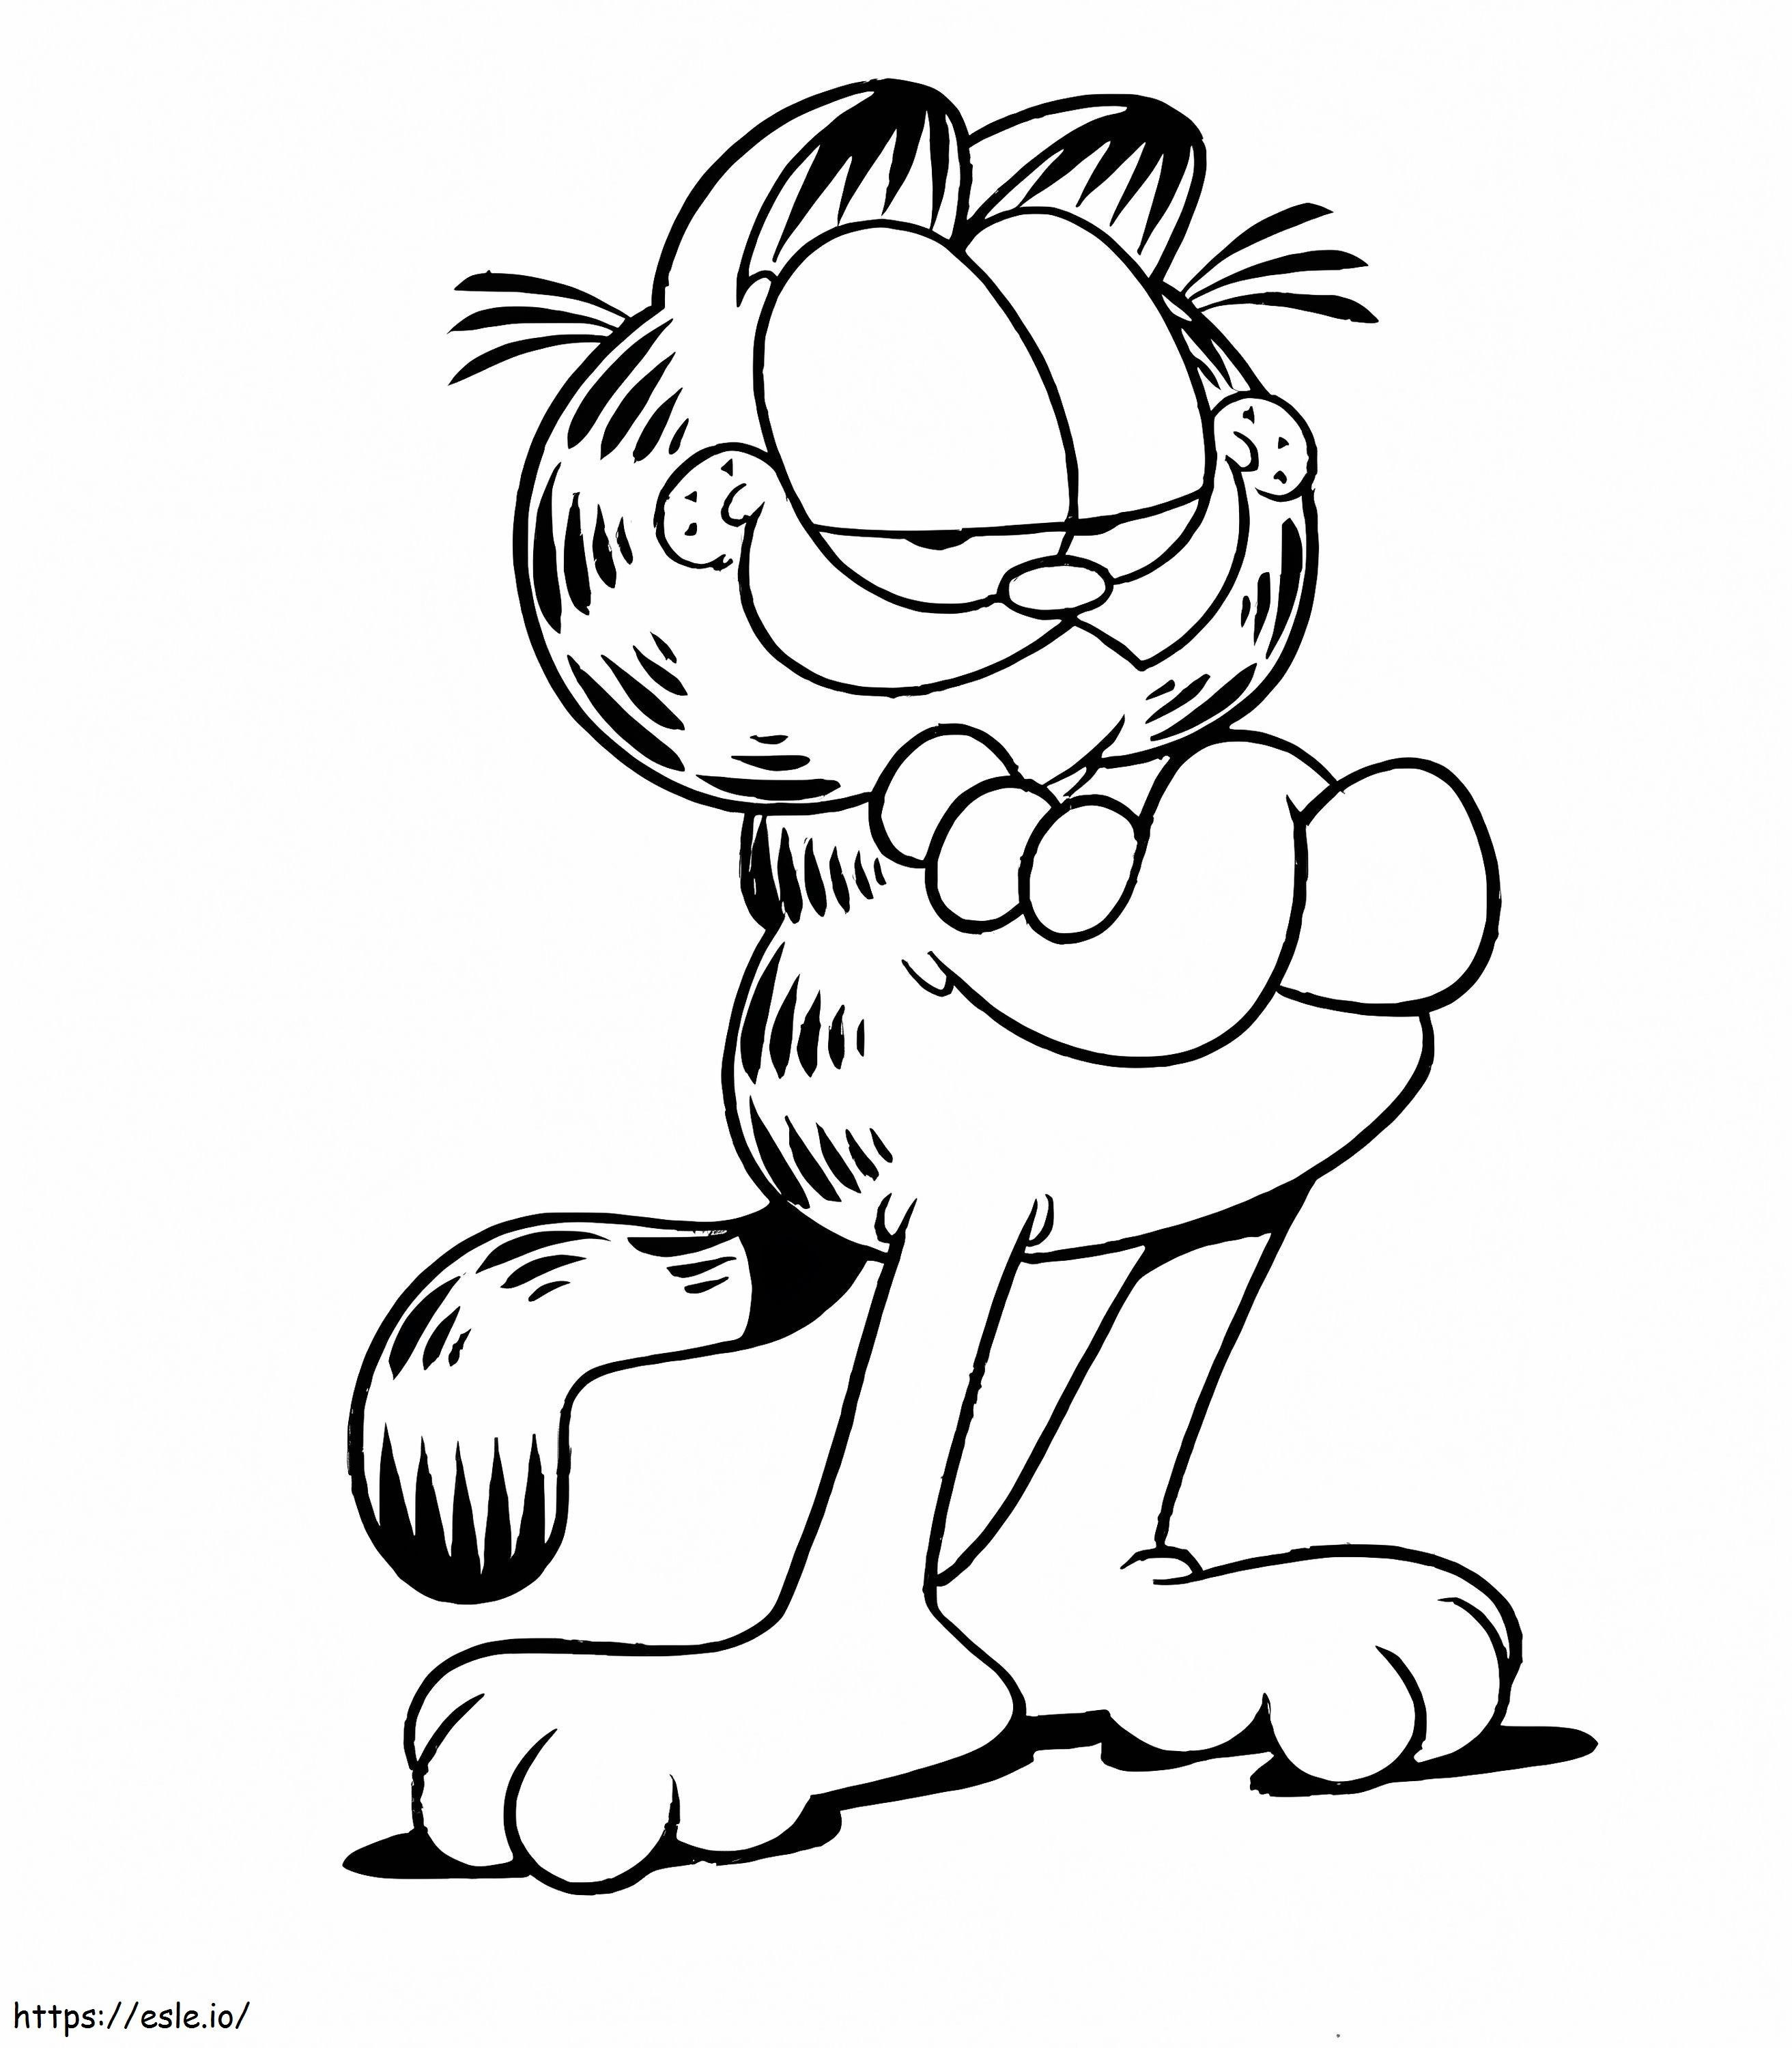 Genialer Garfield ausmalbilder